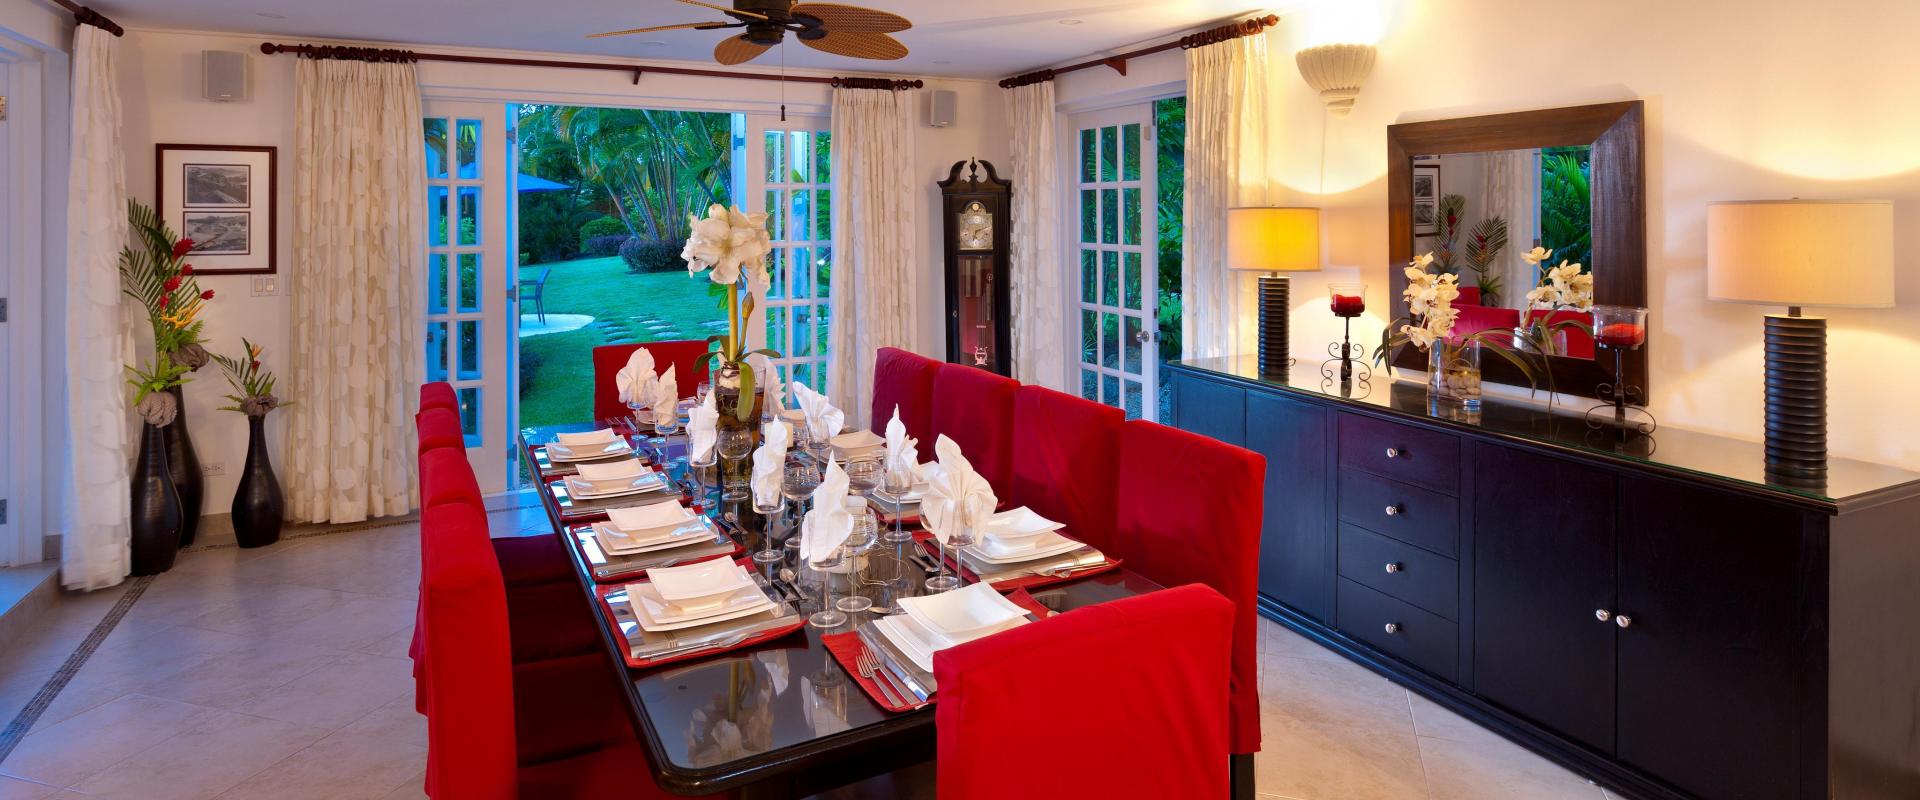 Barbados Holiday Rental Rose Of Sharon Sandy Lane Dining Room